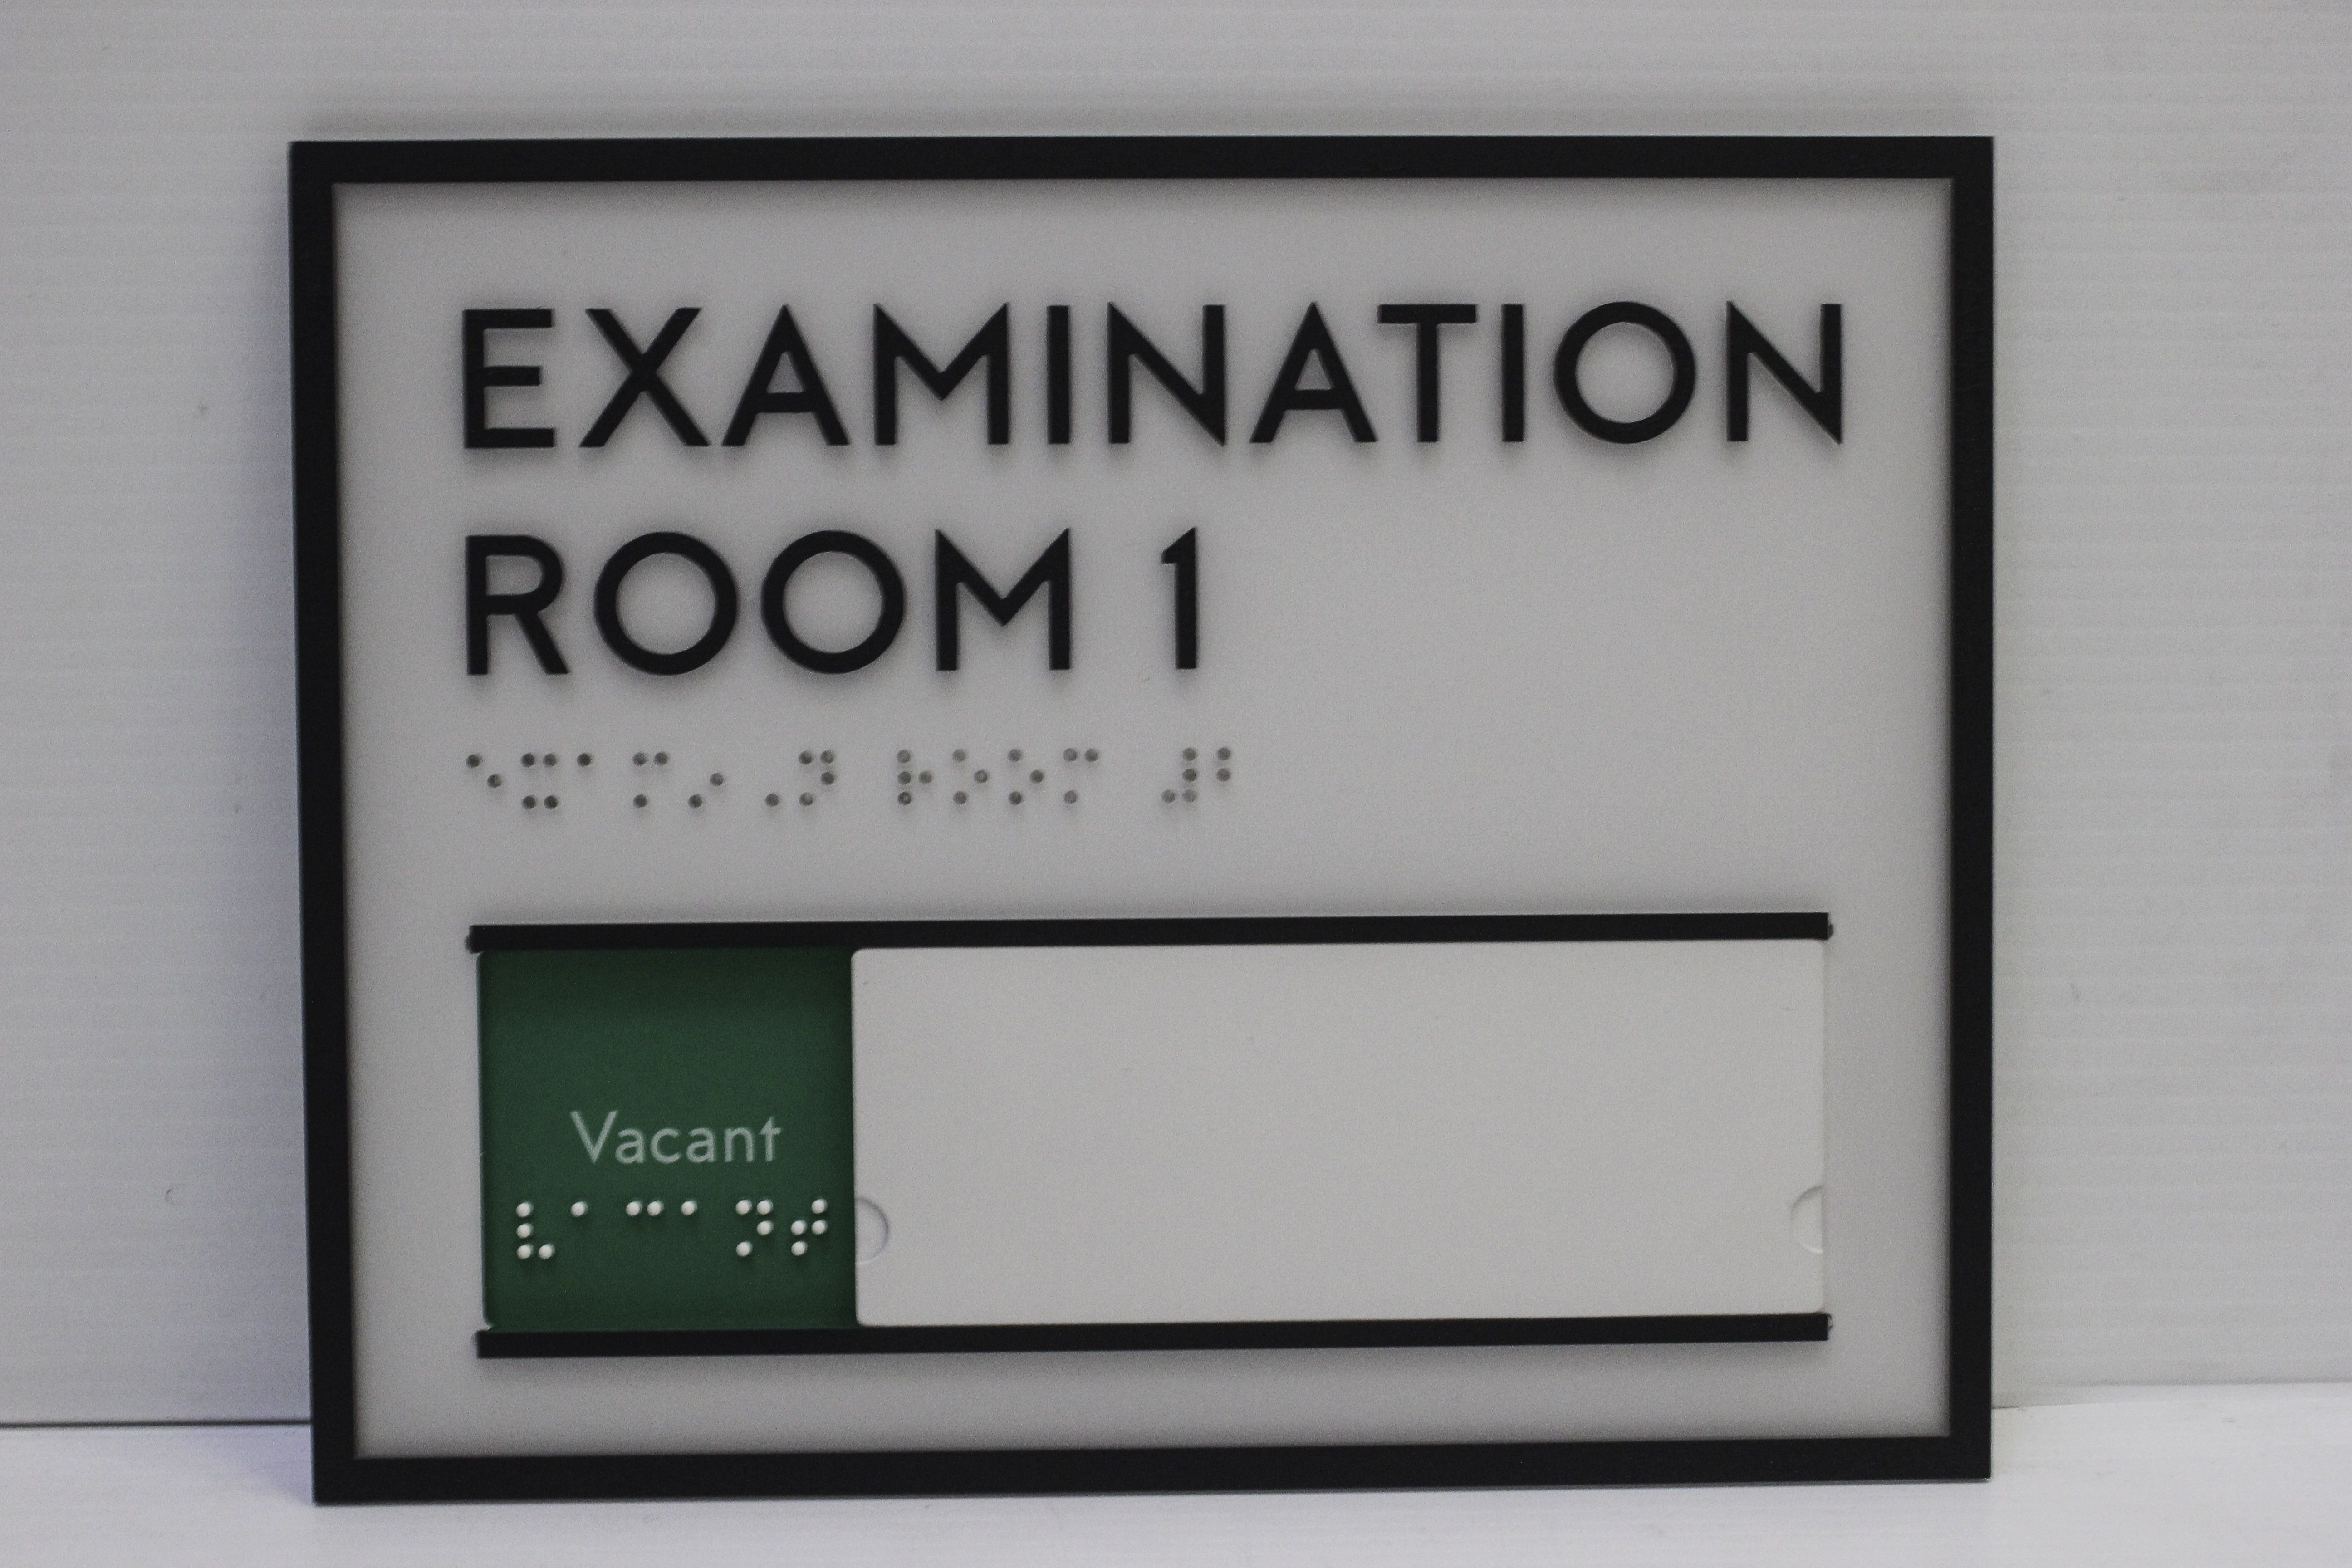 targa braille per non vedenti examination room